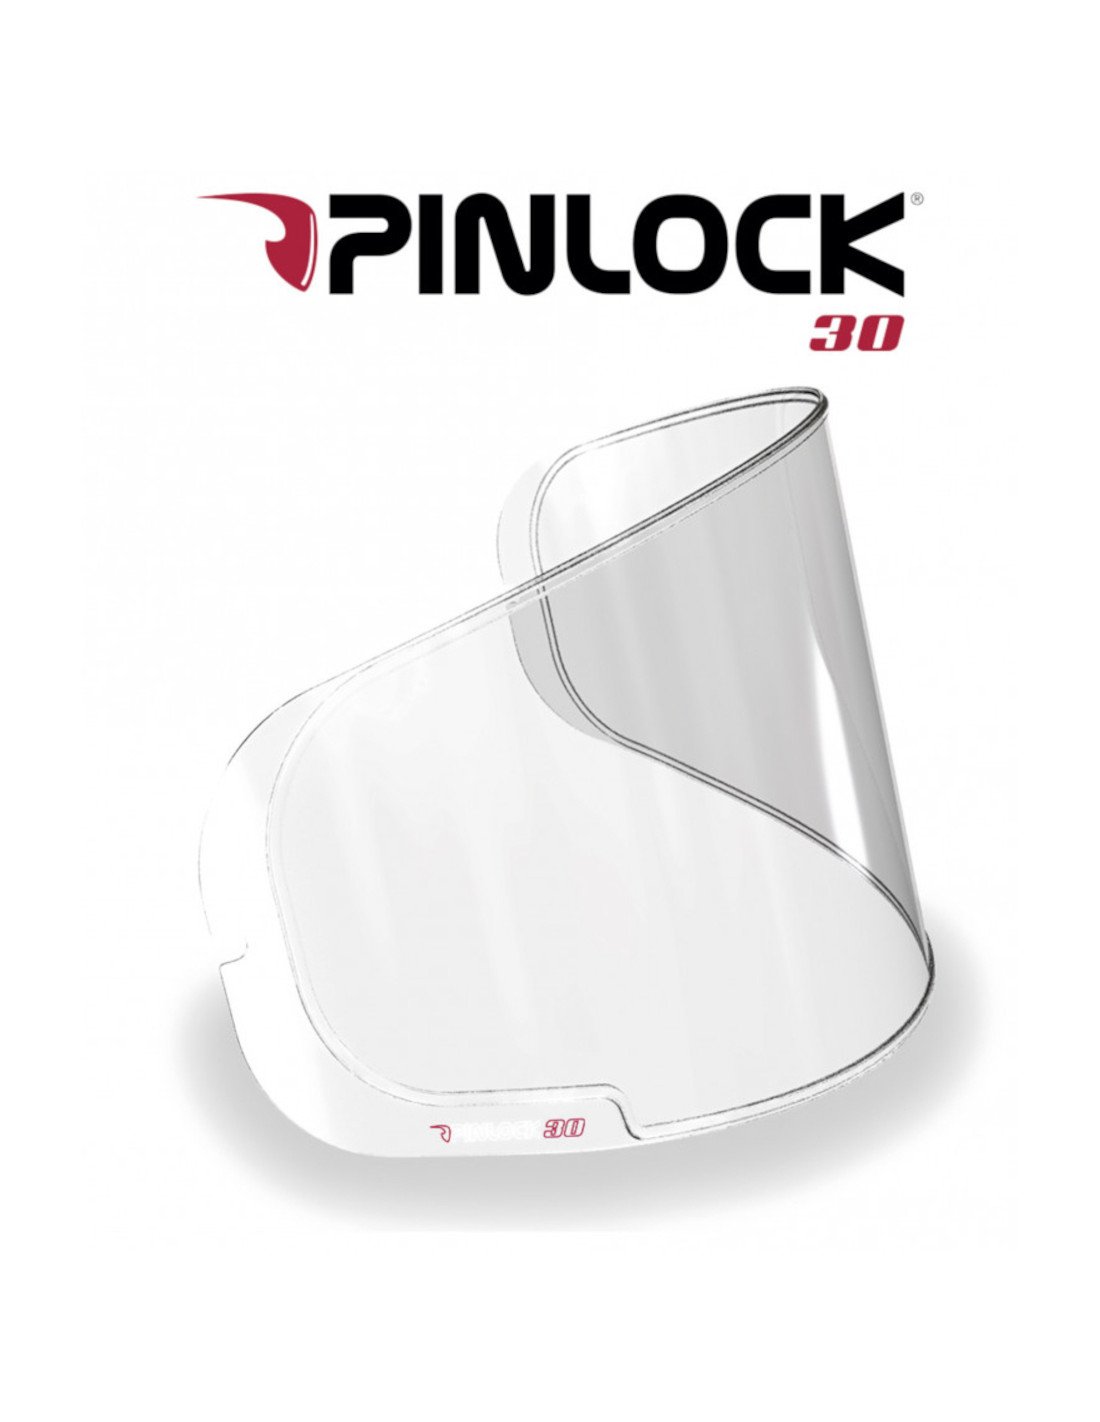 Acheter Visière de casque Pinlock, Film Pinlock universel antibuée